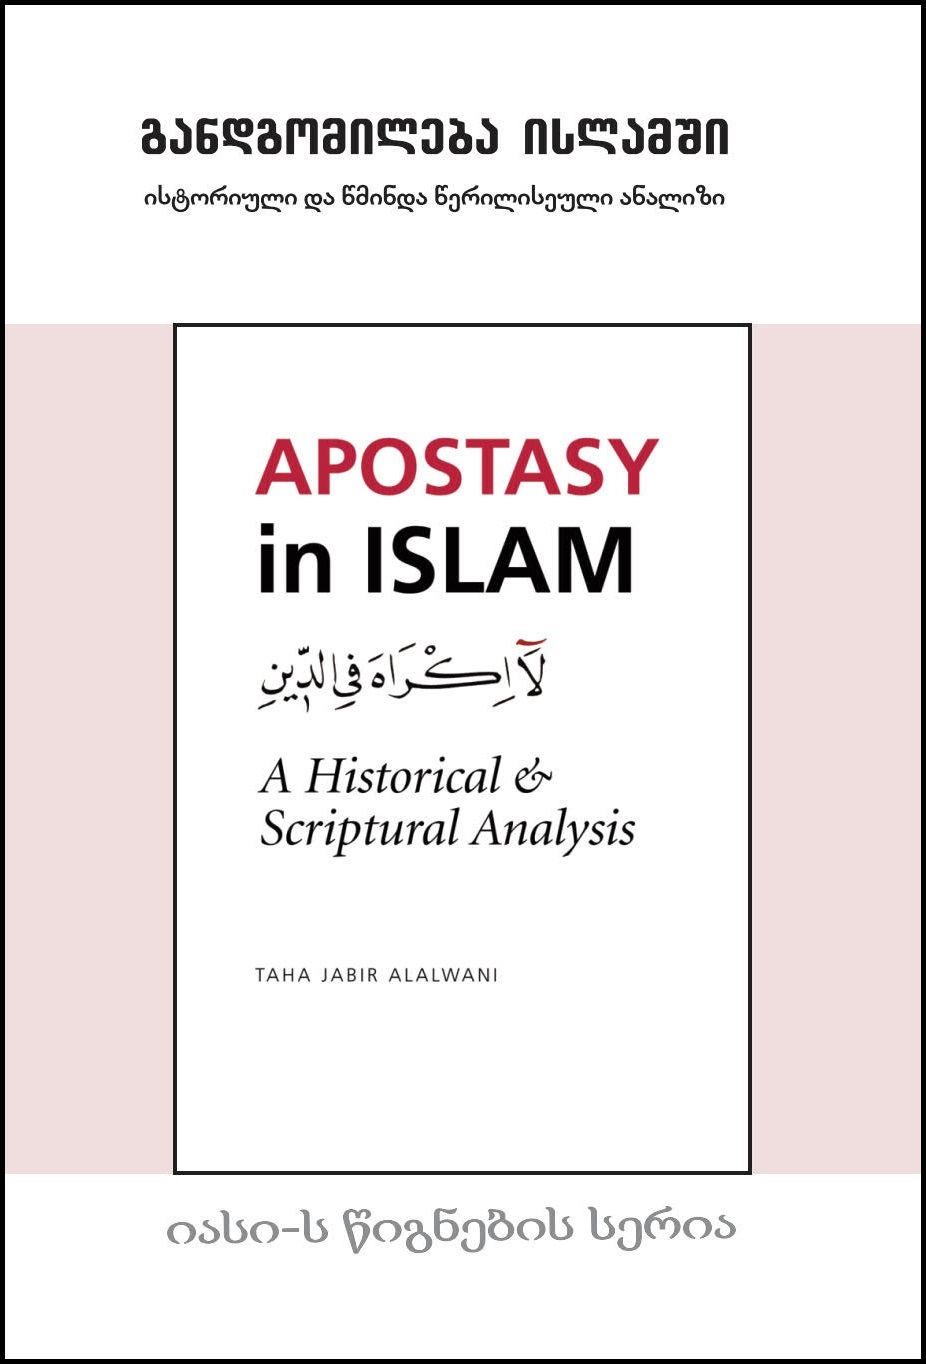 Georgian: gandgomileba islamSi – istoriuli da wminda weriliseuli analizi (Book-in-Brief: Apostasy in Islam: A Historical and Scriptural Analysis)